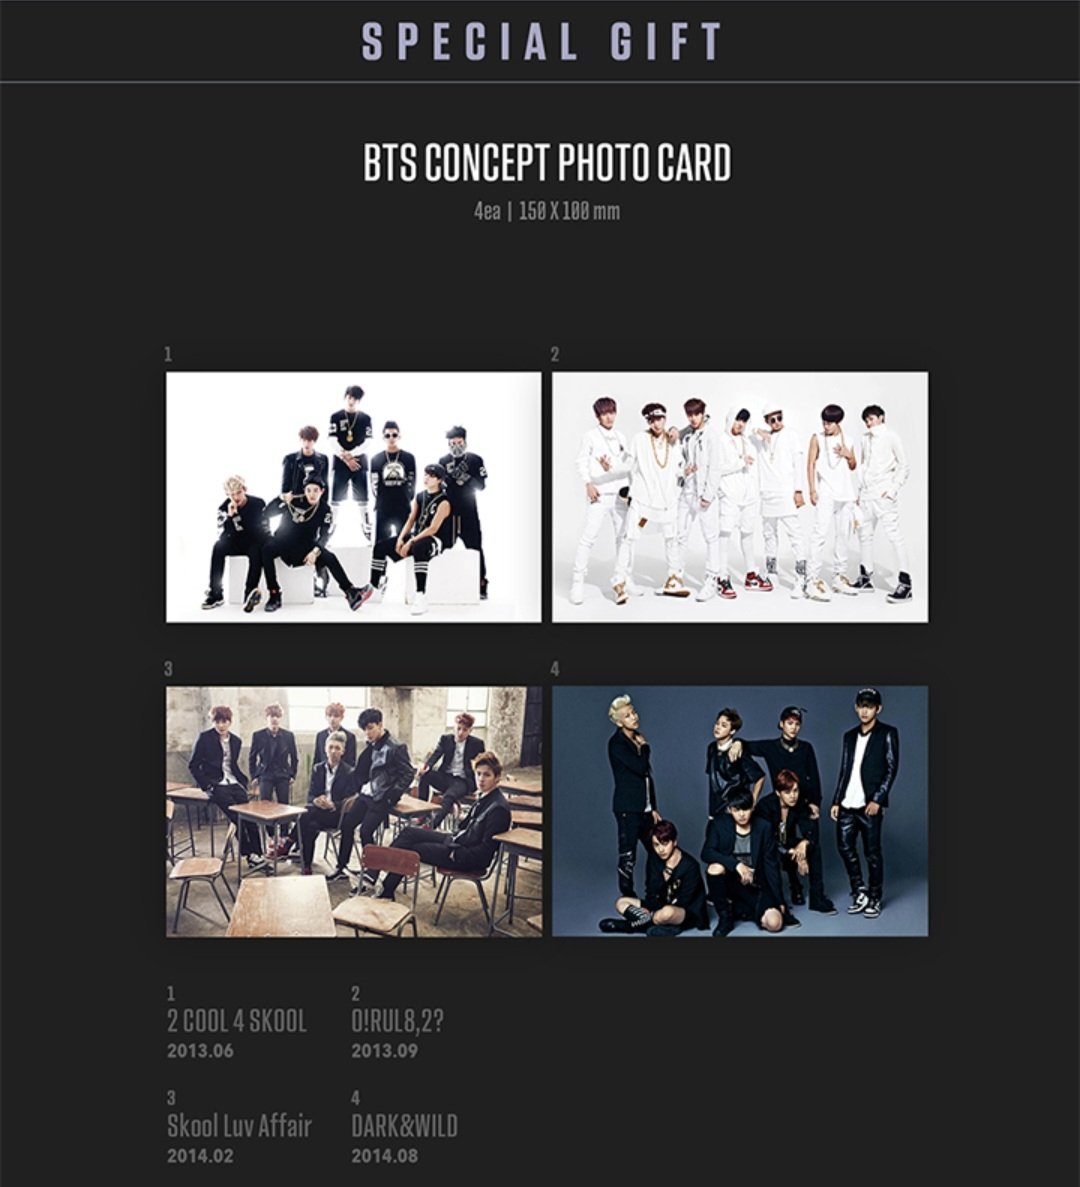 MERCH] BTS 'Anthology' Piano Sheet Music — US BTS ARMY